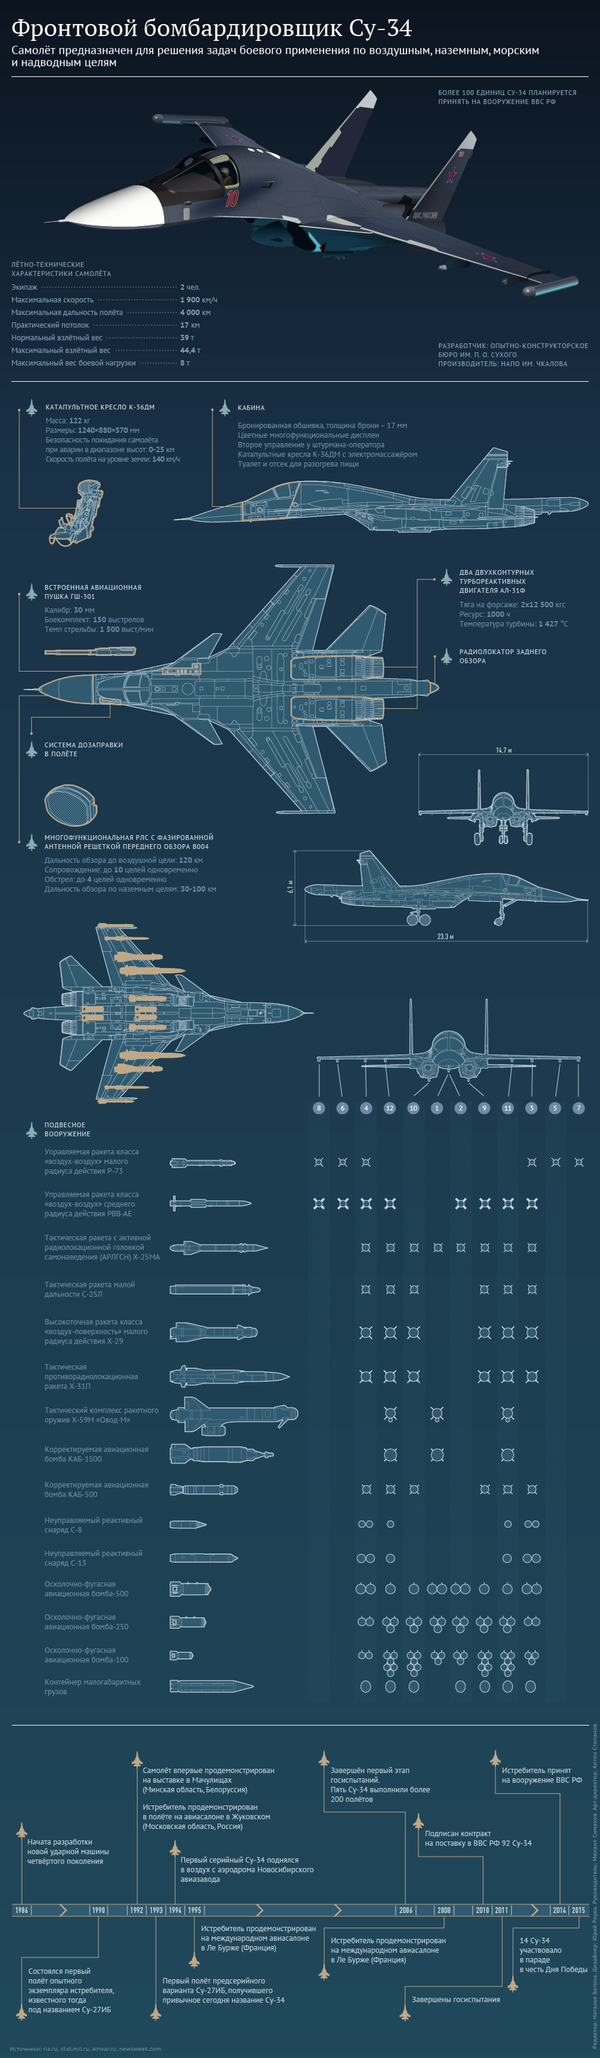 Характеристики бомбардировщика Су-34 - Sputnik Грузия